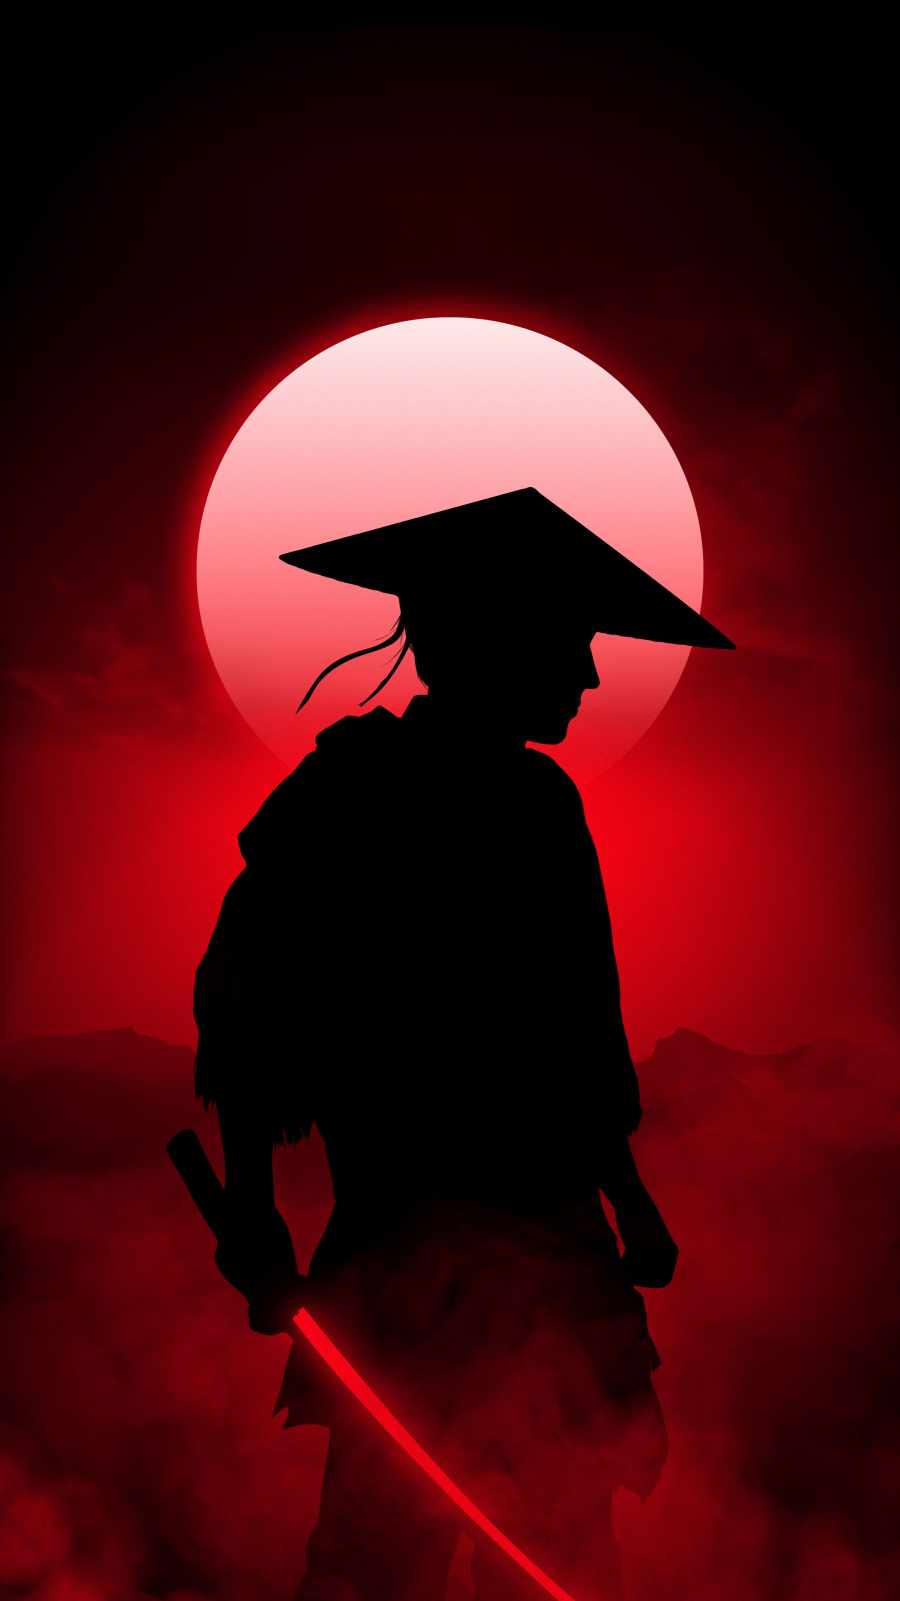 Samurai Red Moon